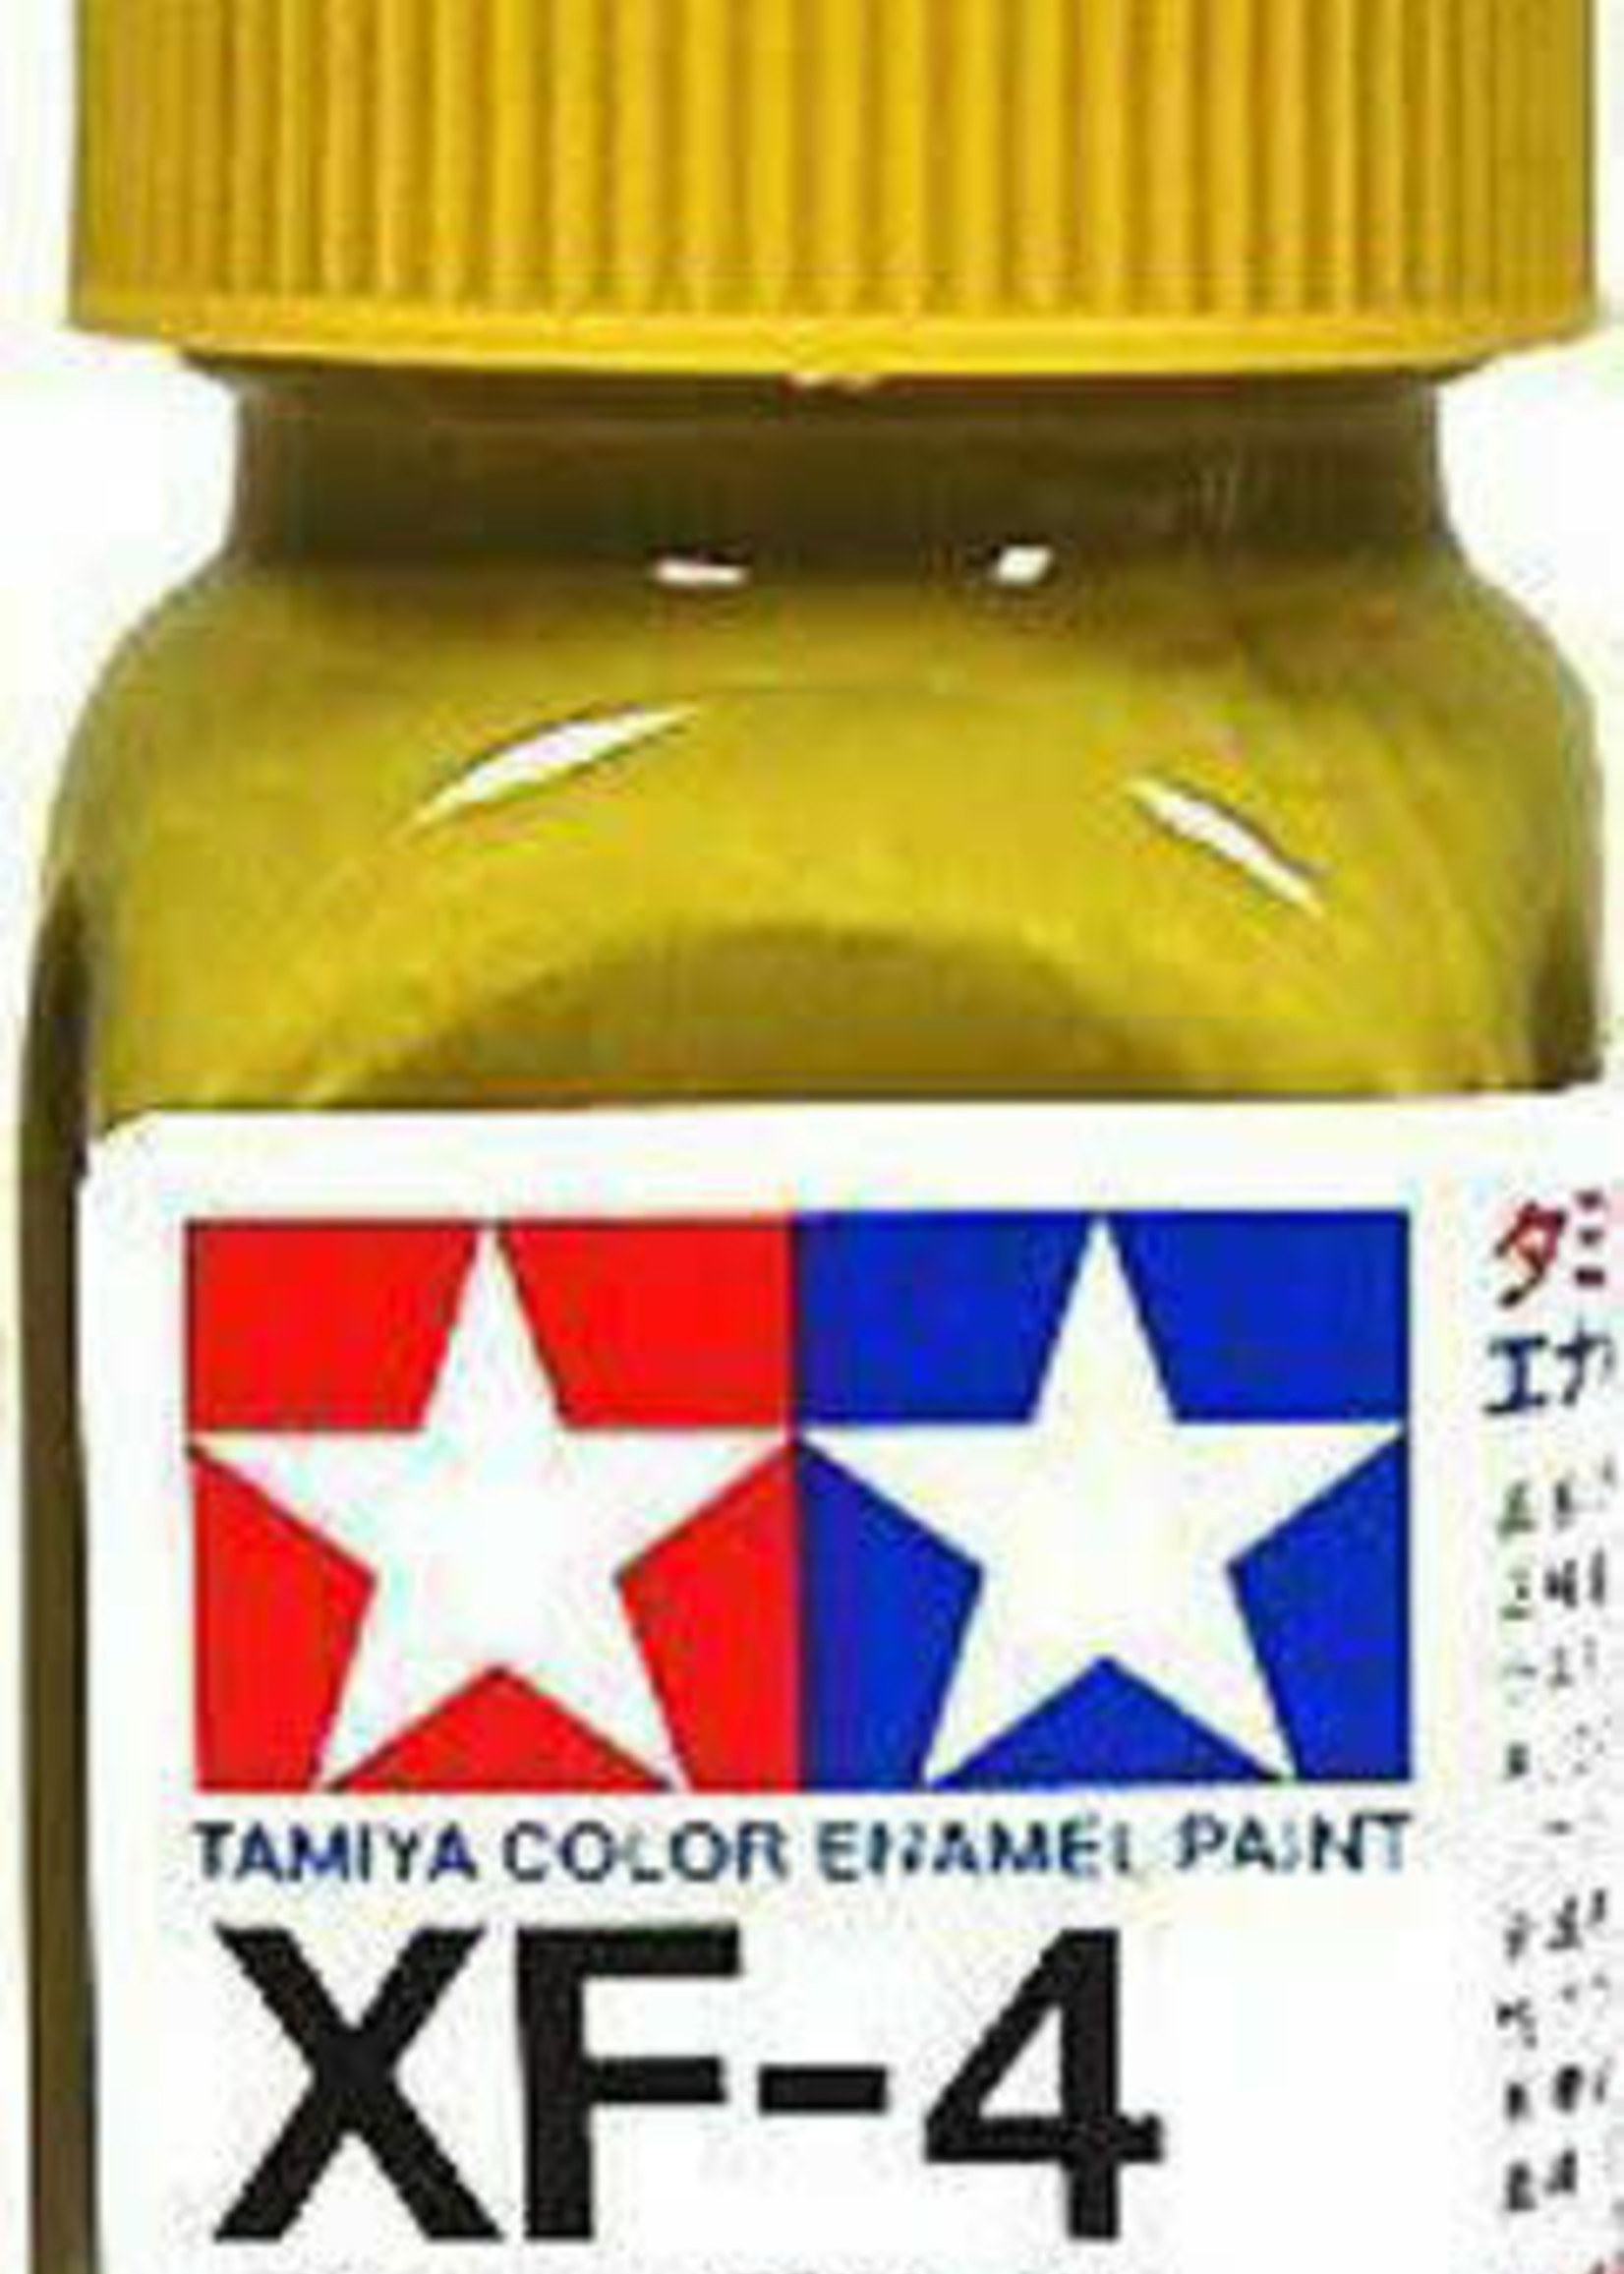 Tamiya Tamiya color enamel paint - XF-4  - Yellow green